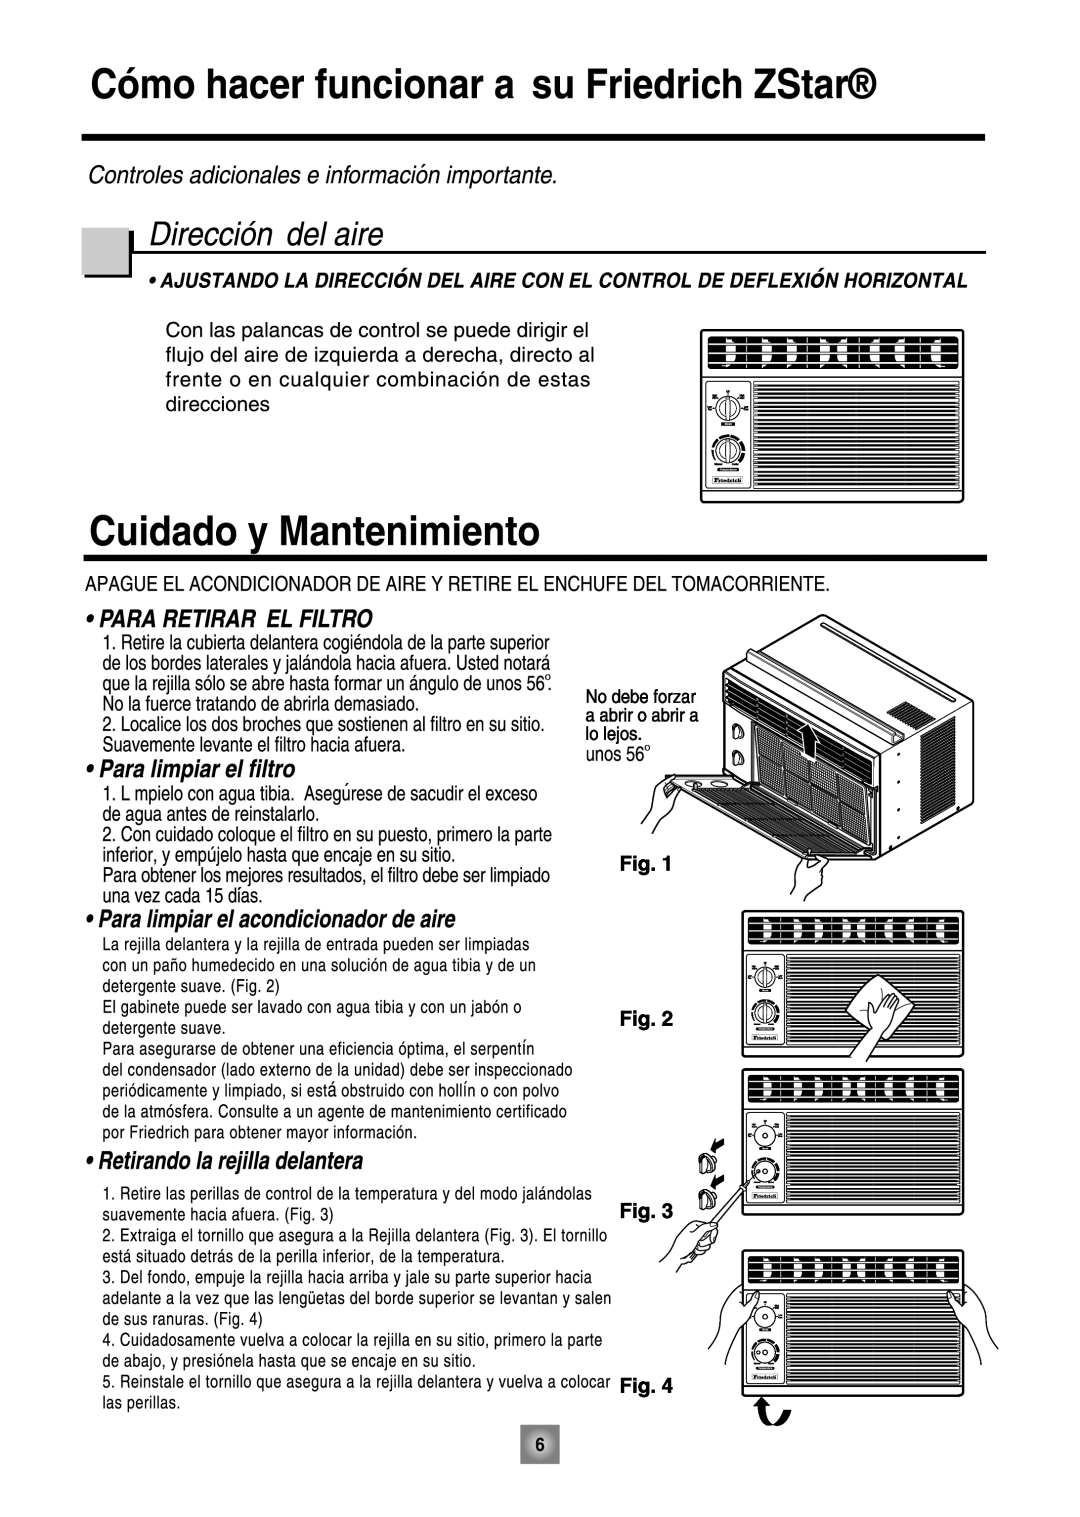 Friedrich ZStar operation manual 